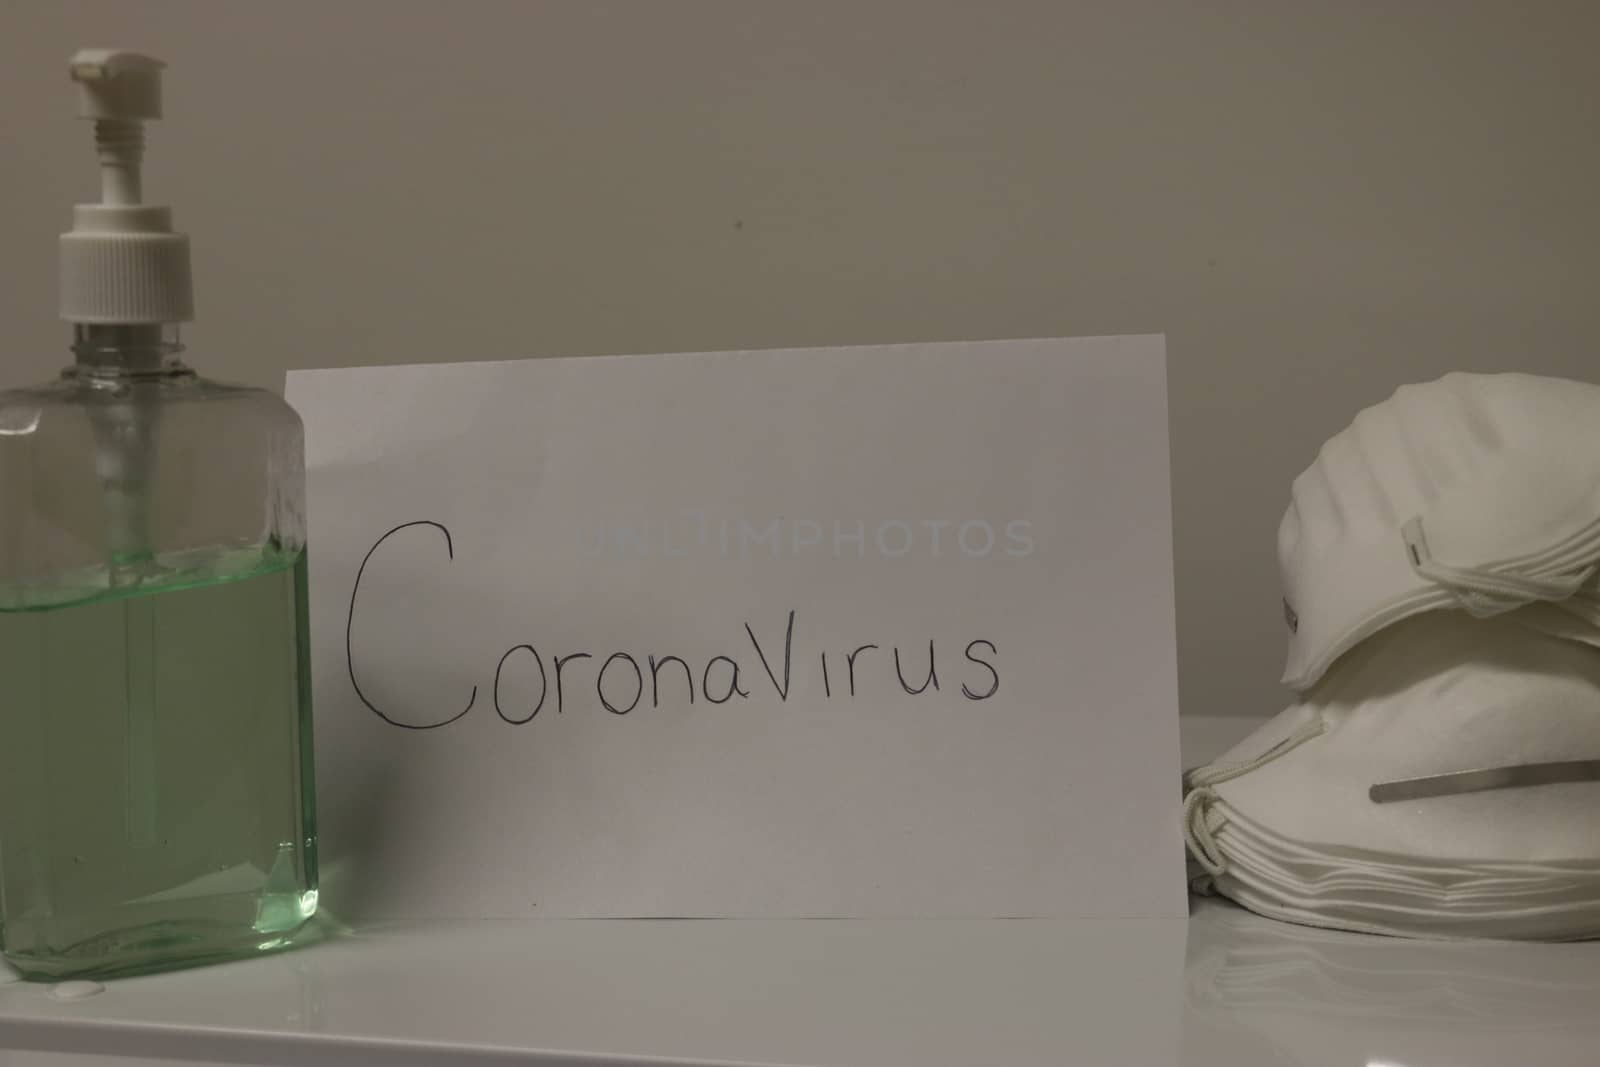 Coronavirus Hand Sanitizer Bottle Dispensing Rubbing Alcohol Gel For Hands Hygiene Health Care. by mynewturtle1